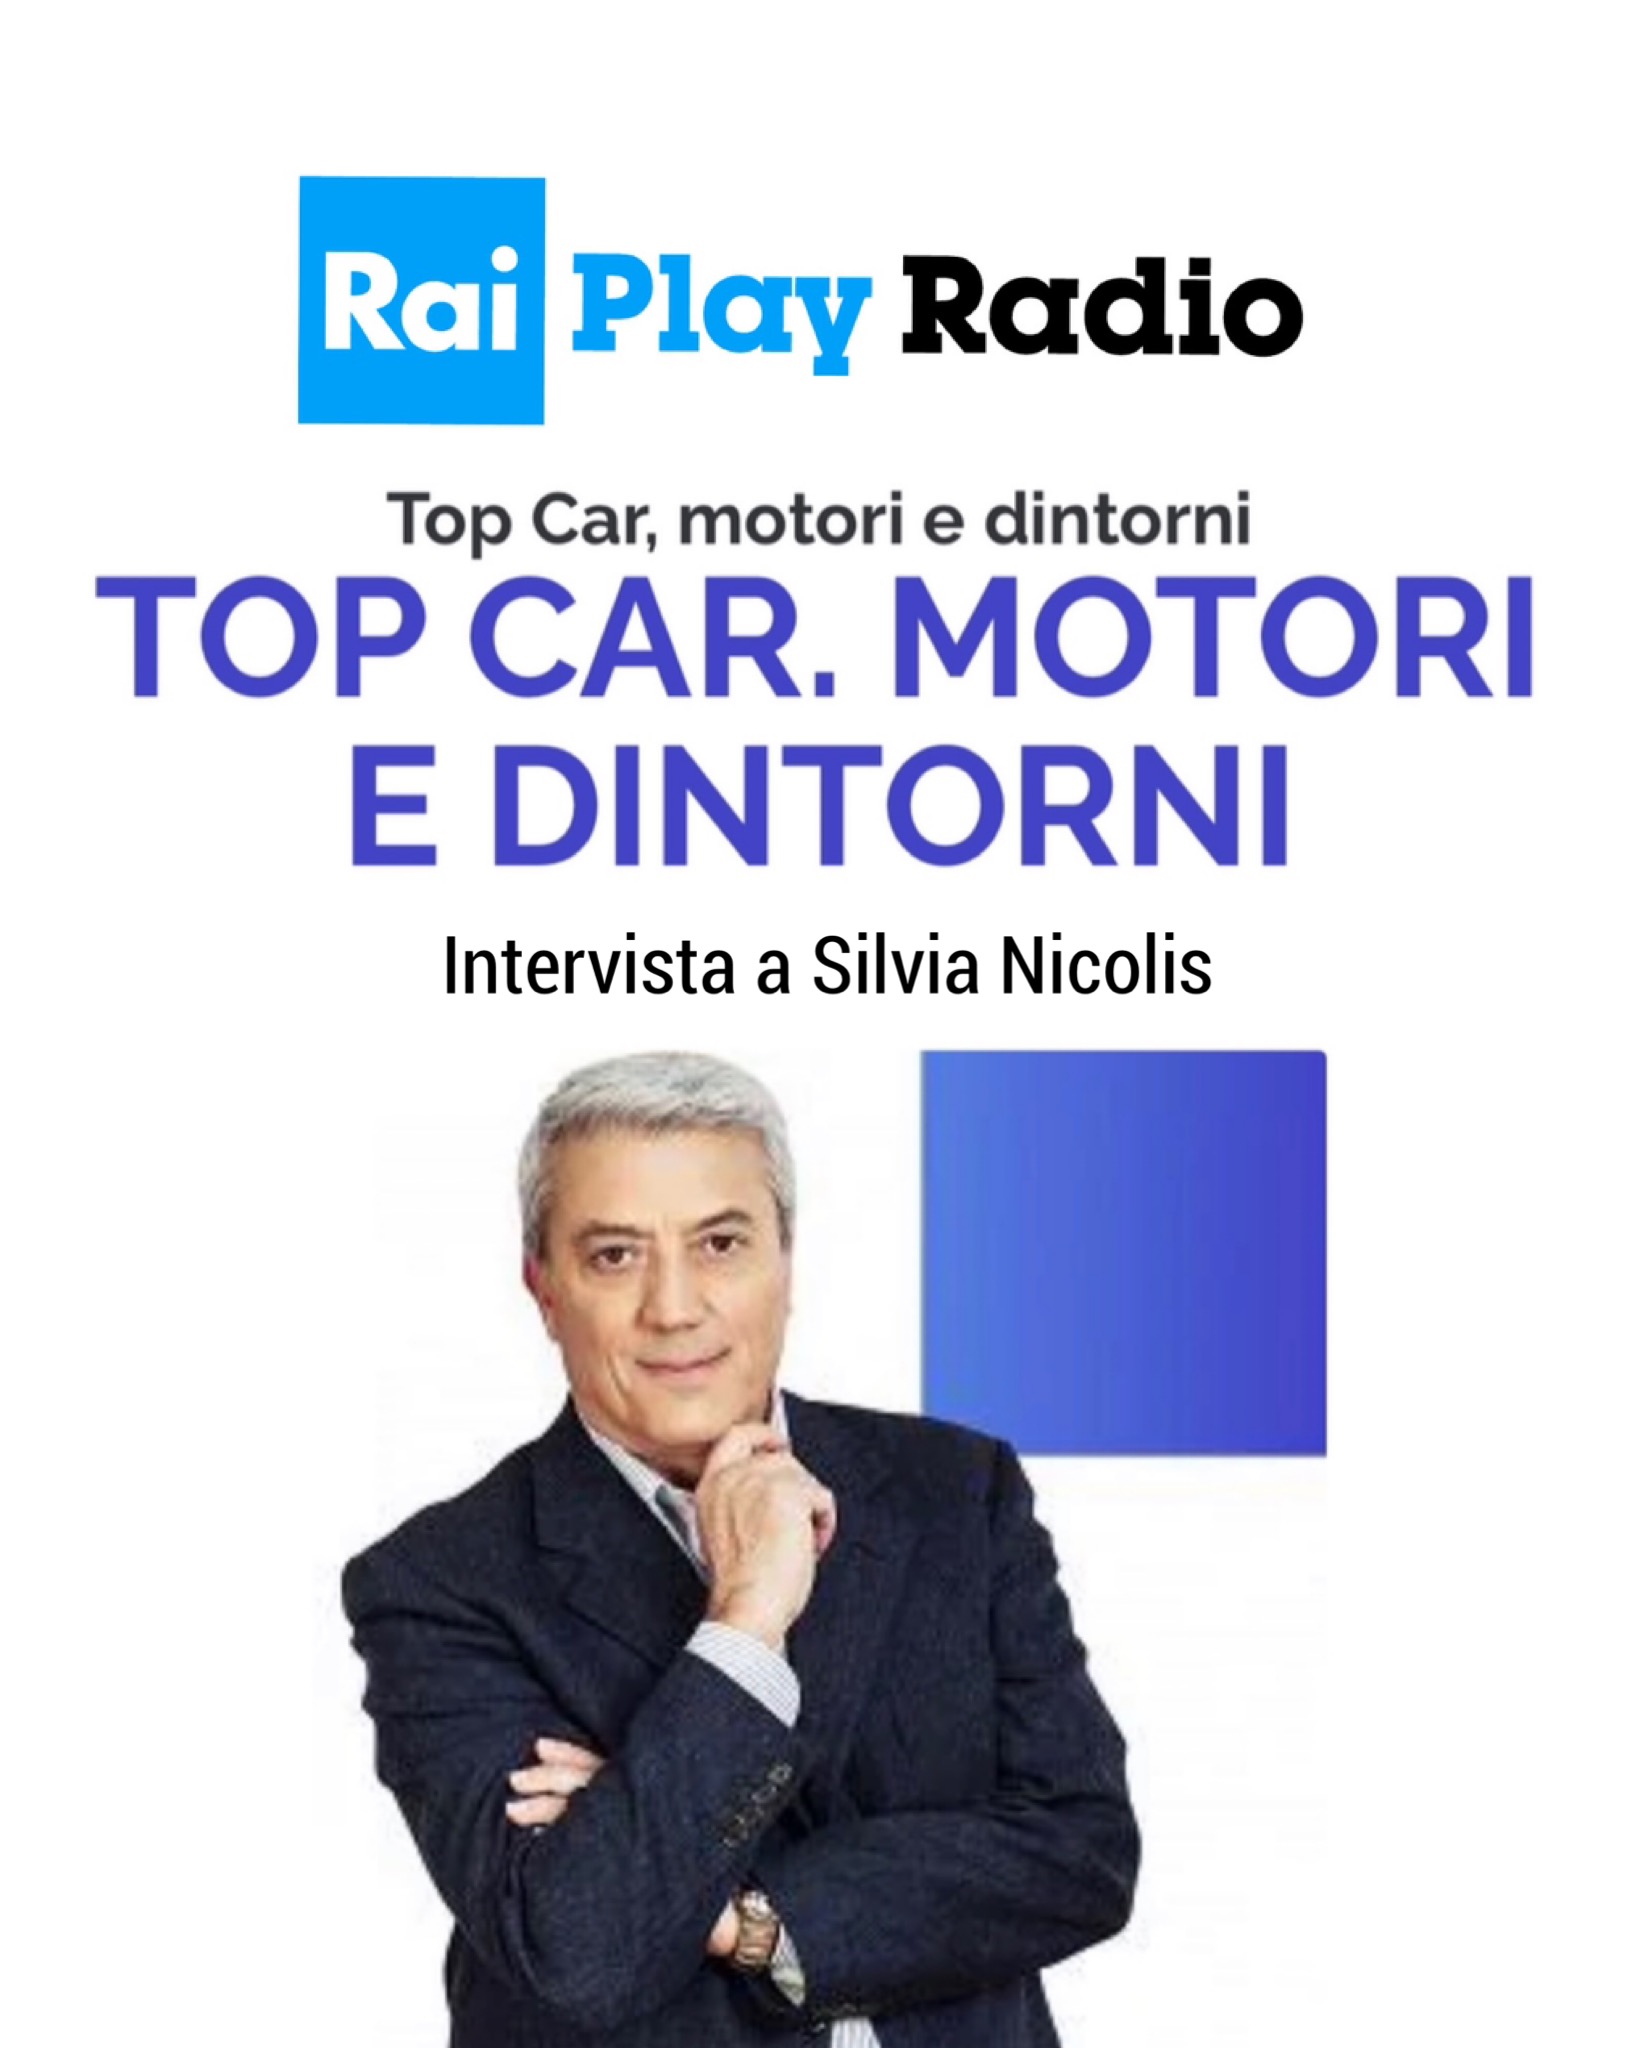 RaiPlayRadio, Top Car, intervista a Silvia Nicolis.